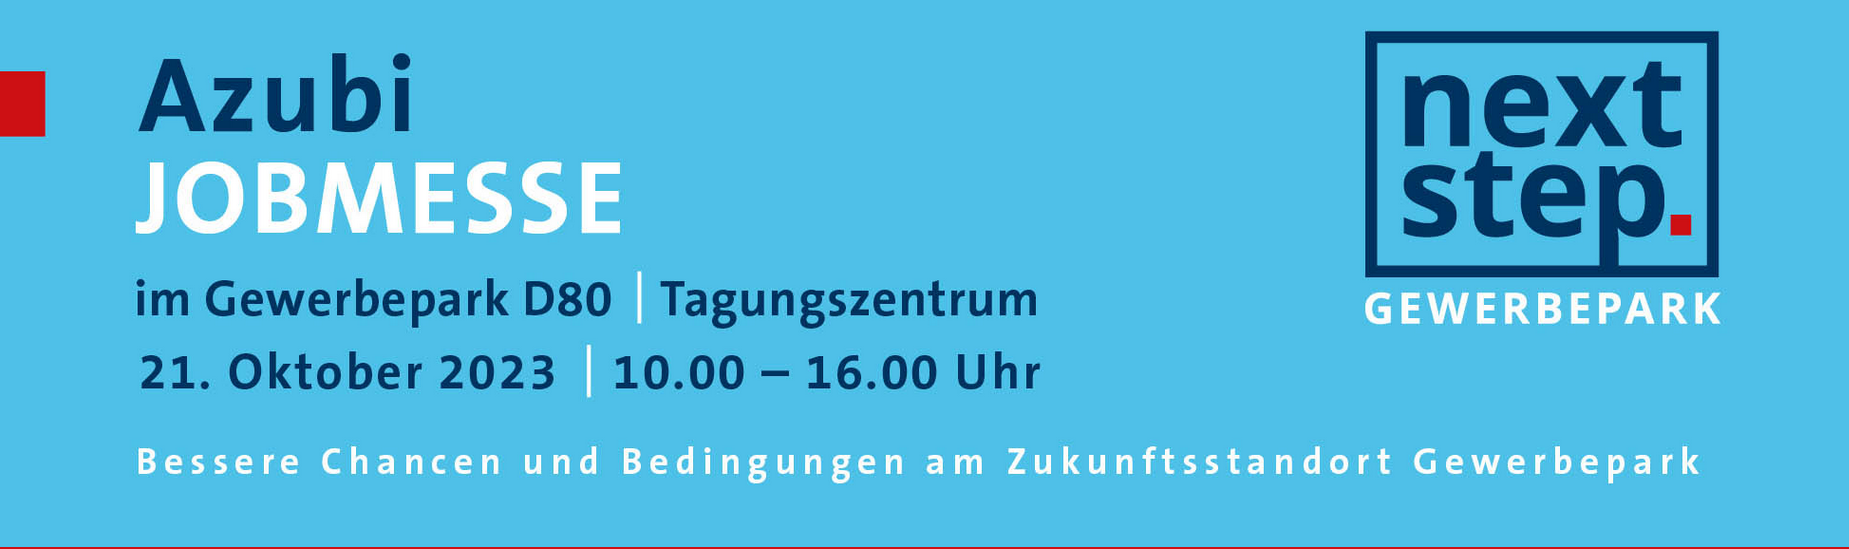 Azubi Jobmesse next step Gewerbepark Regensburg